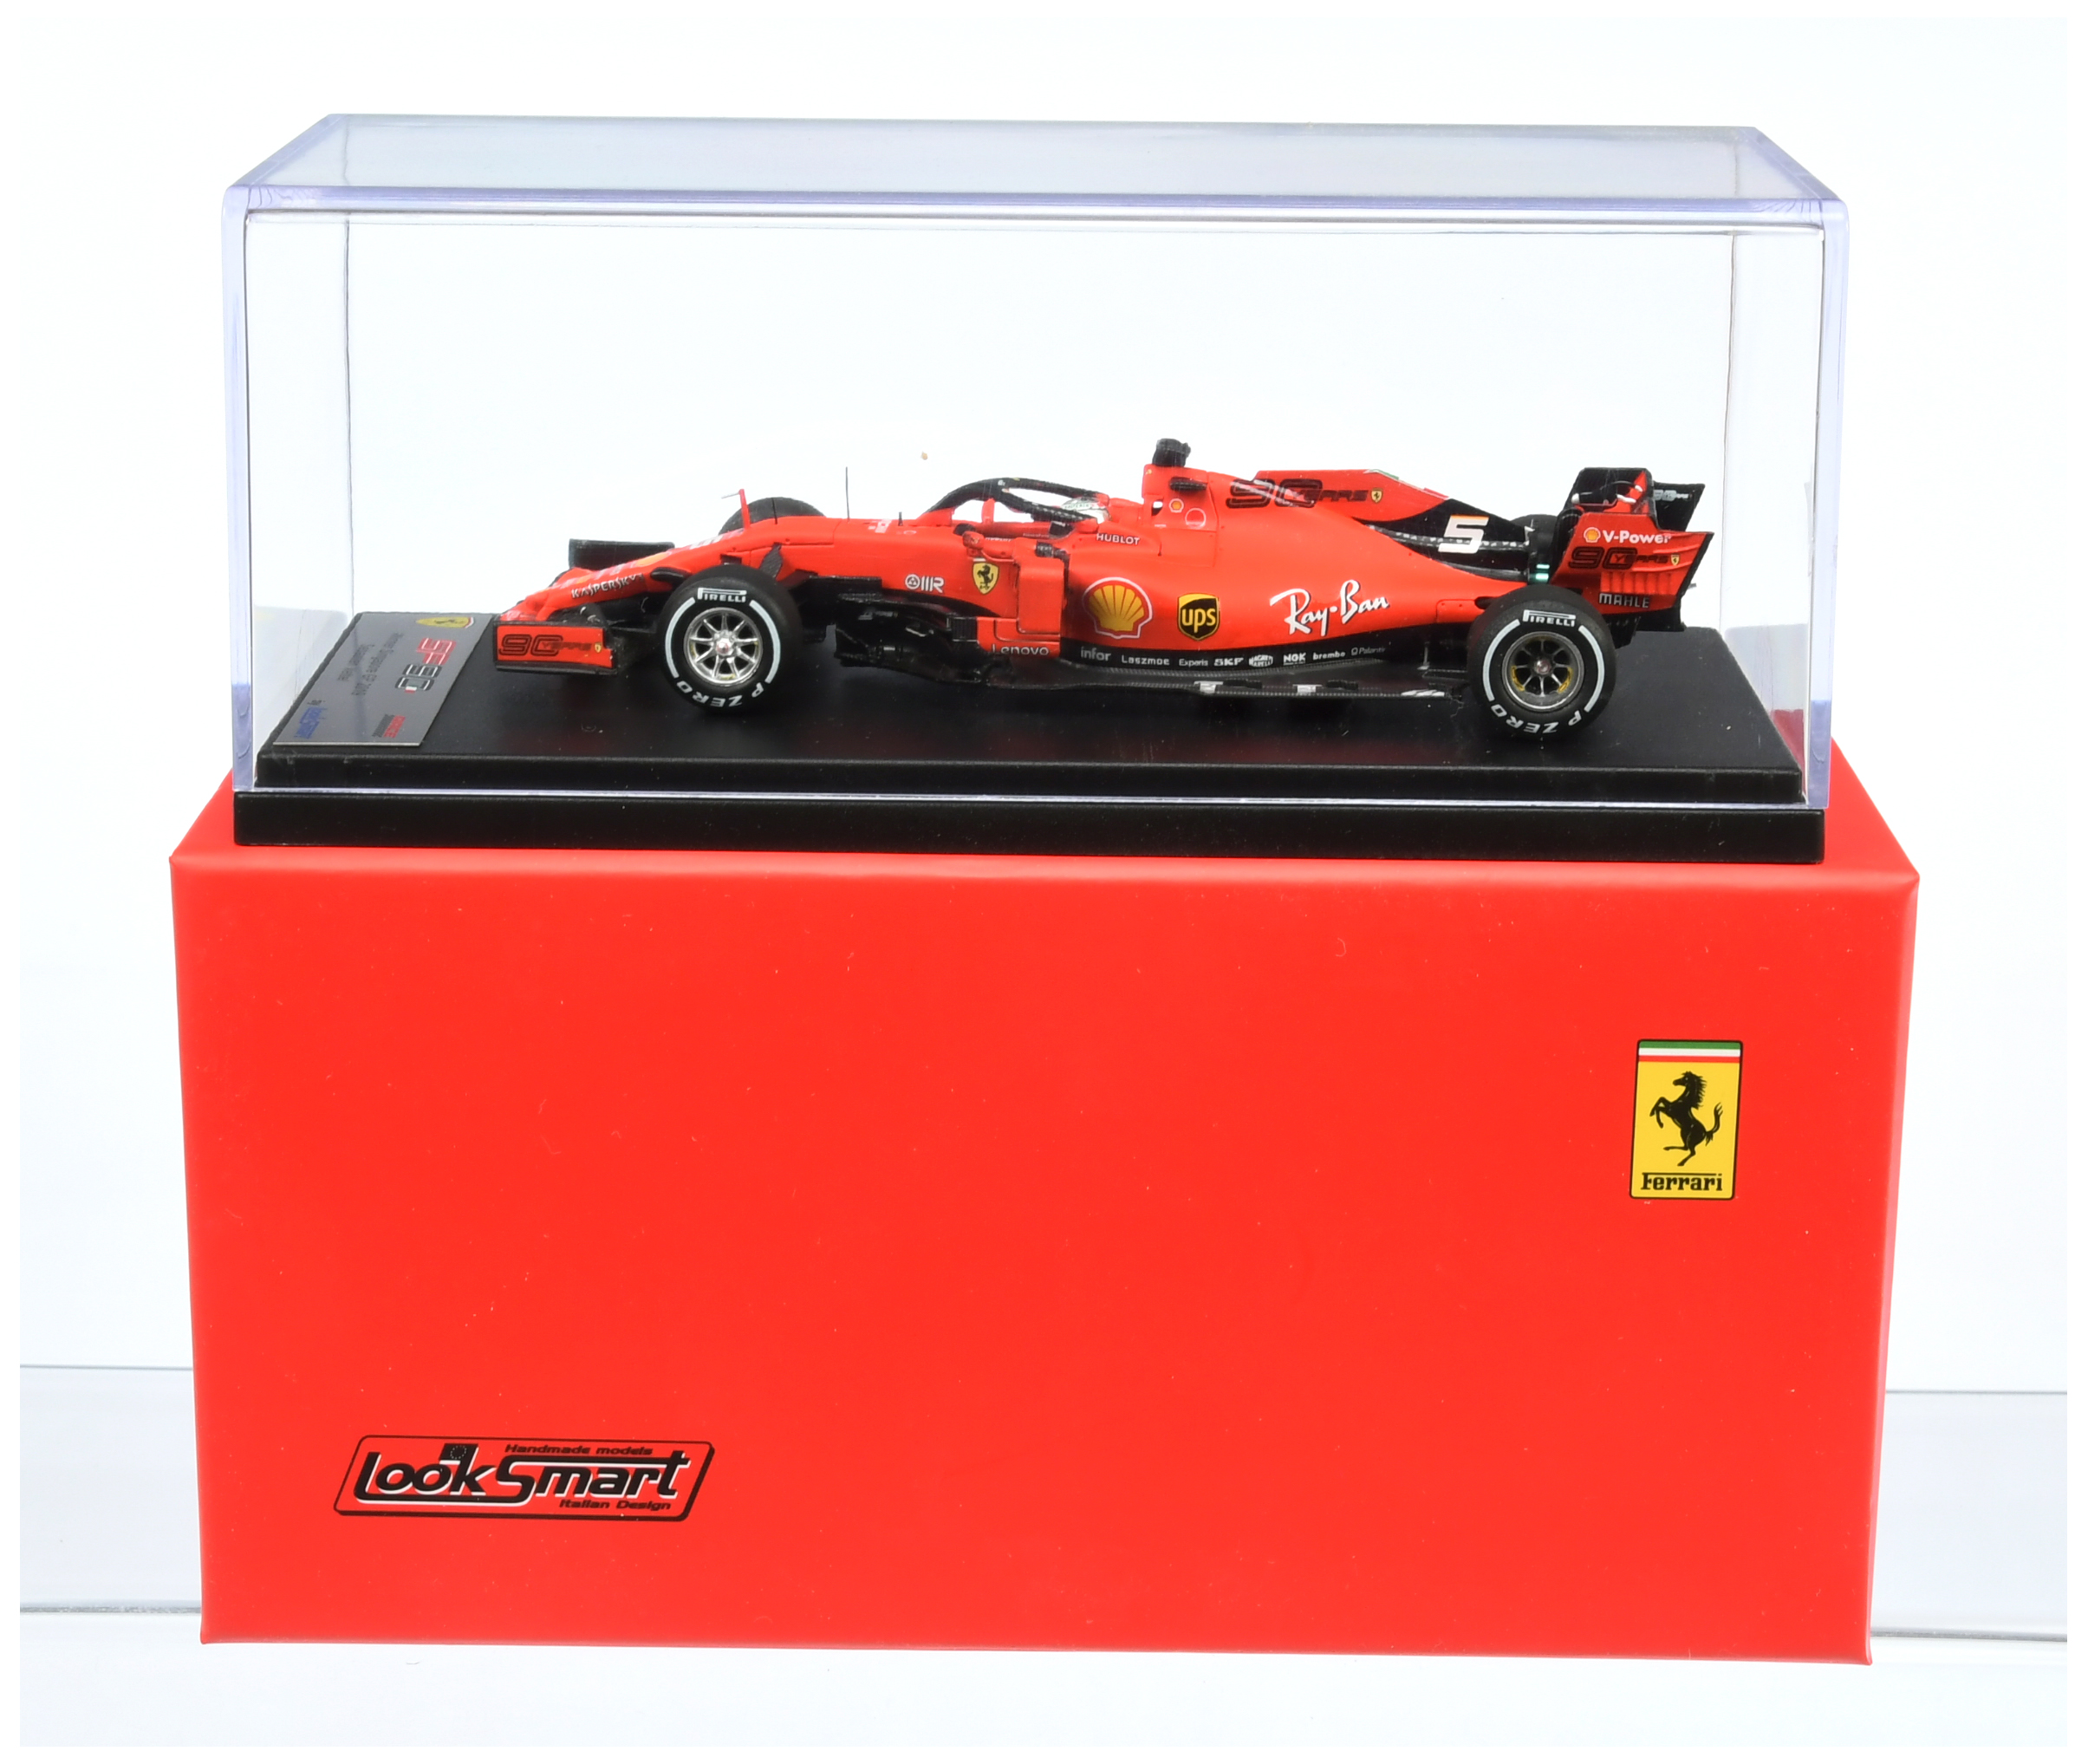 Look Smart (1/43rd) LSF1025 Ferrari SF90 " Singapore" GP- "Vettel" 2019